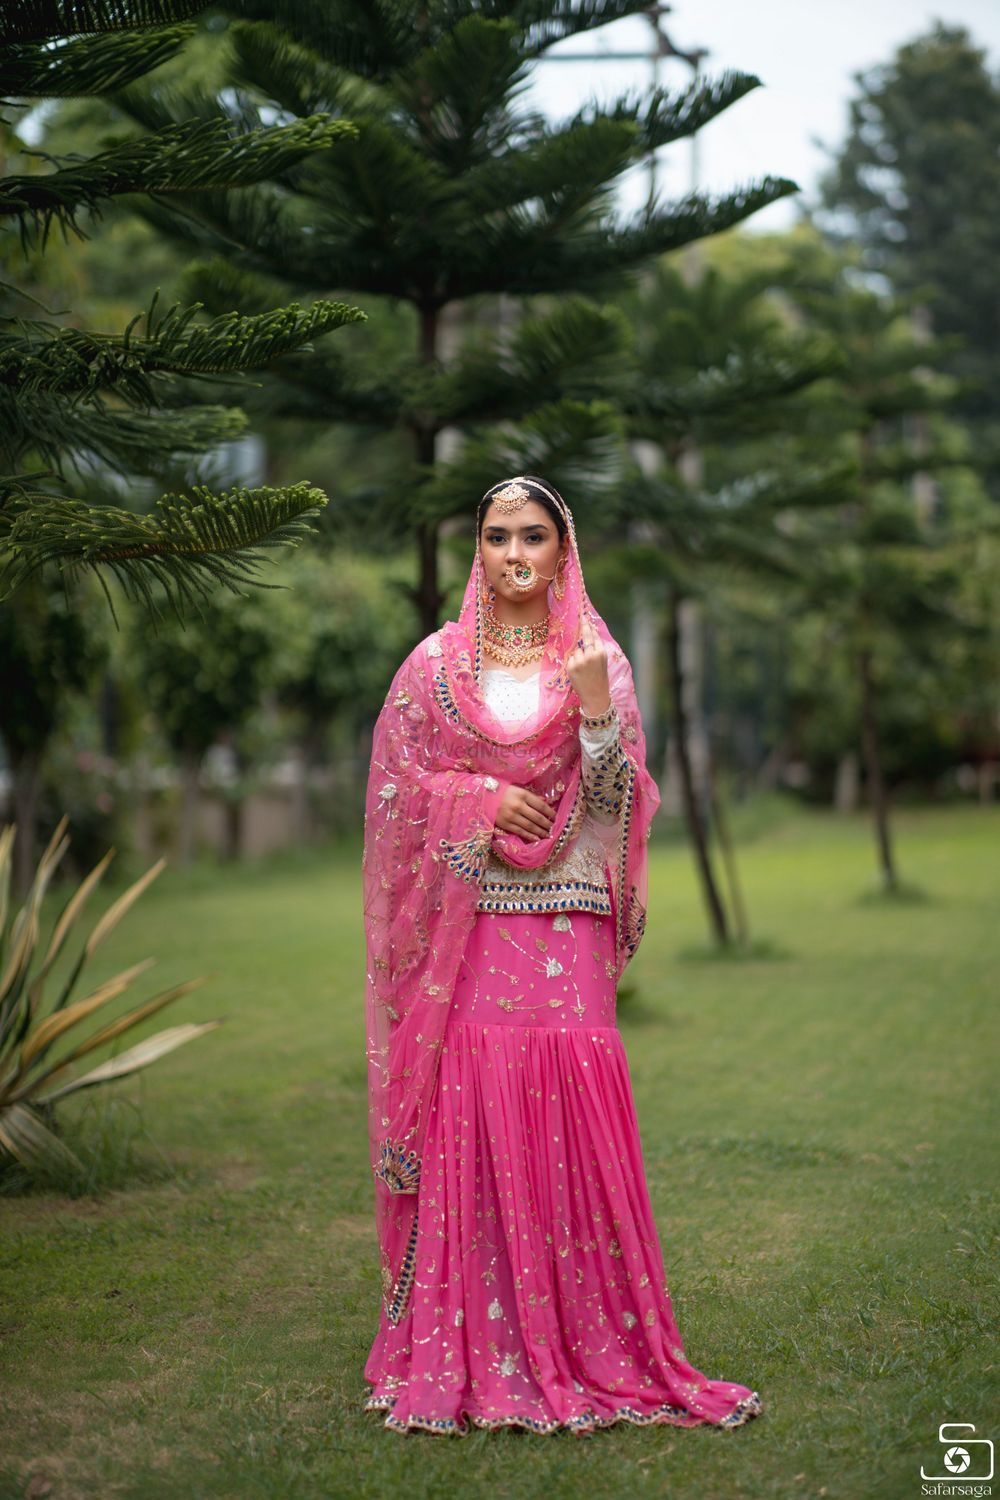 Photo From Simran Narang - Safarsaga Films - Bride Shoot - By Safarsaga Films